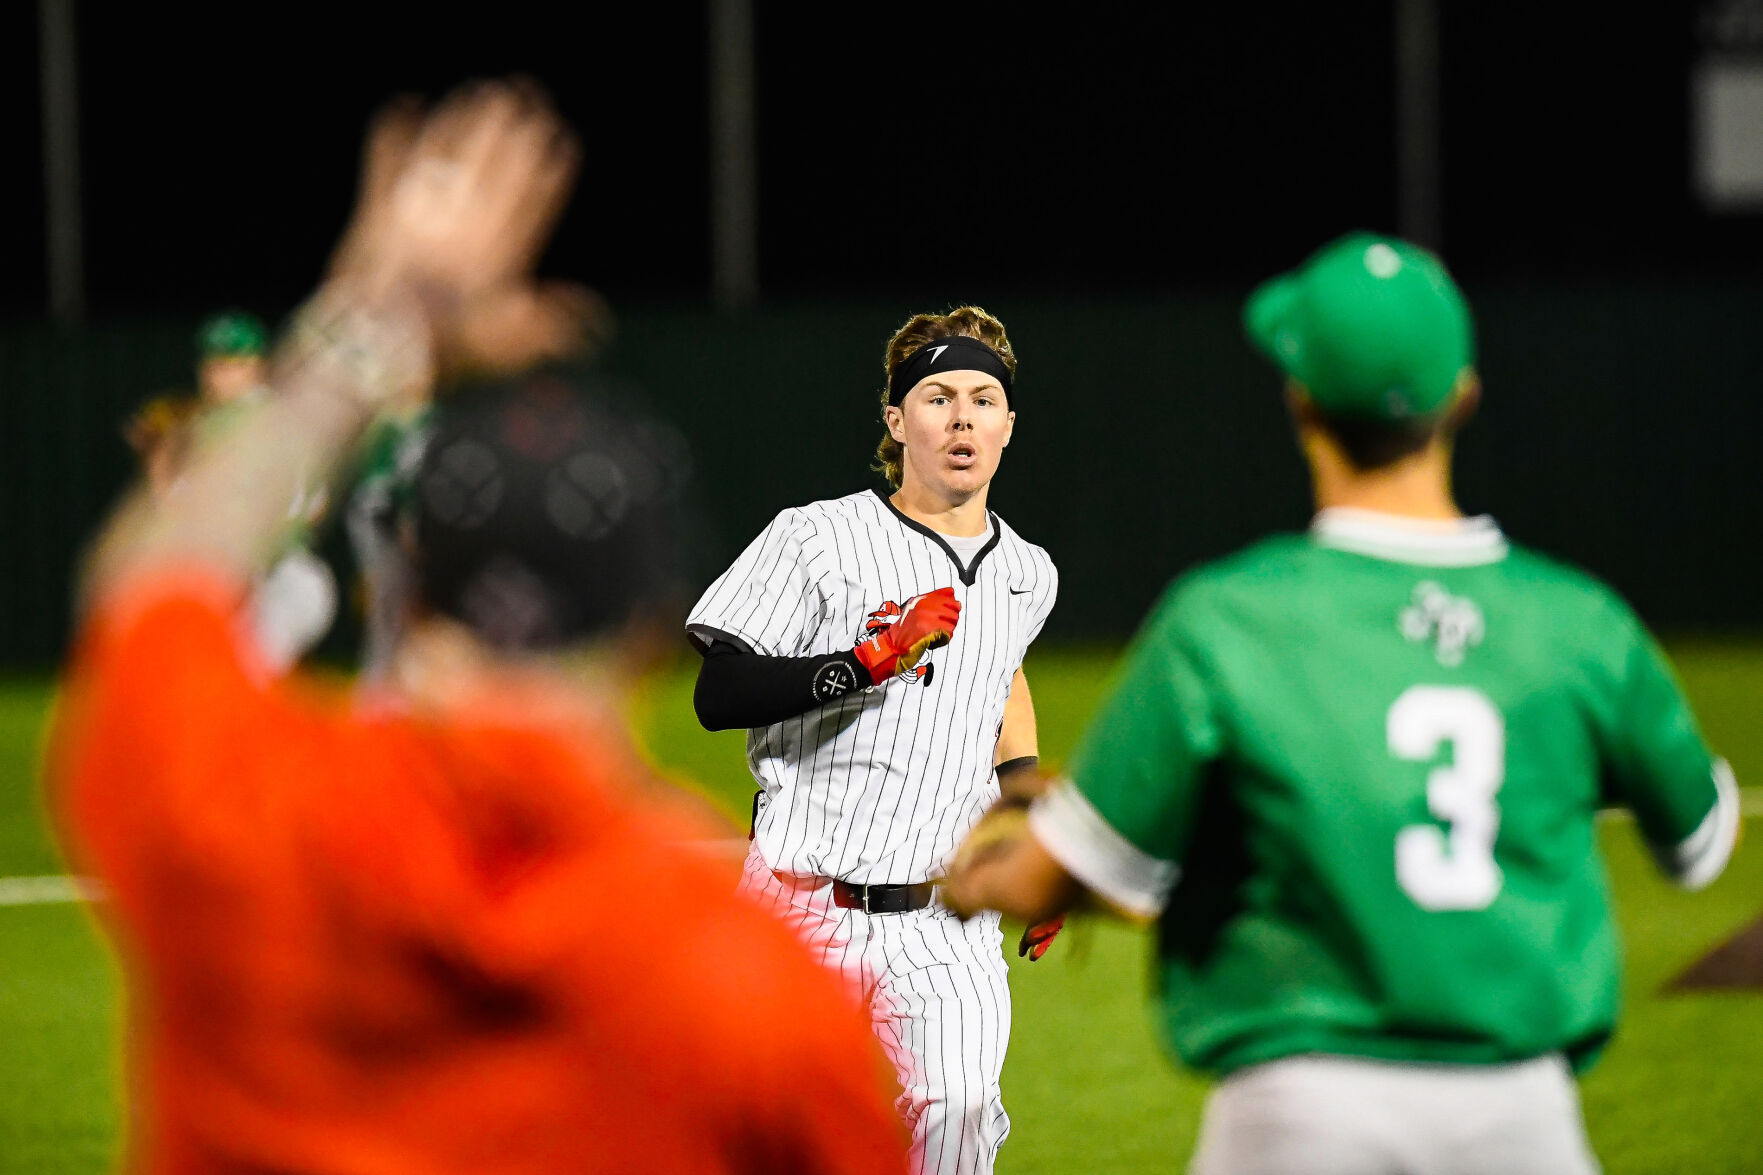 Area Baseball Recap: Updates on Argyle, Aubrey, Ryan, and More